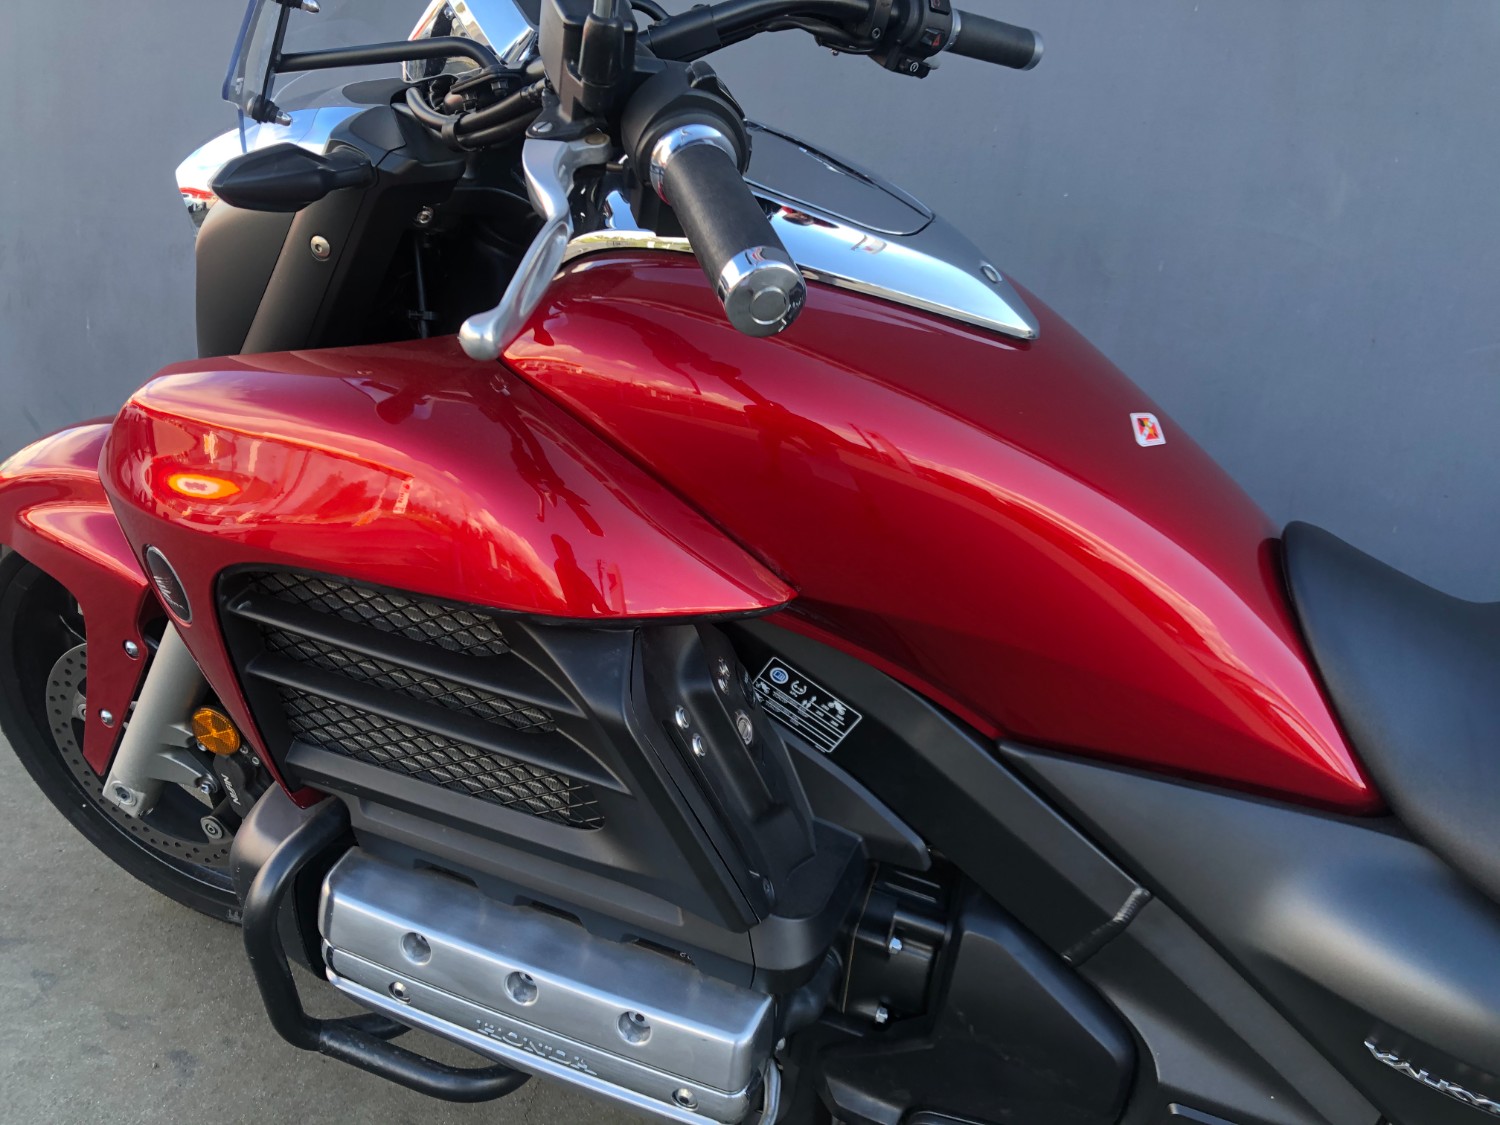 2015 Honda Valkyrie 1800cc GL1800C Motorcycle Image 25